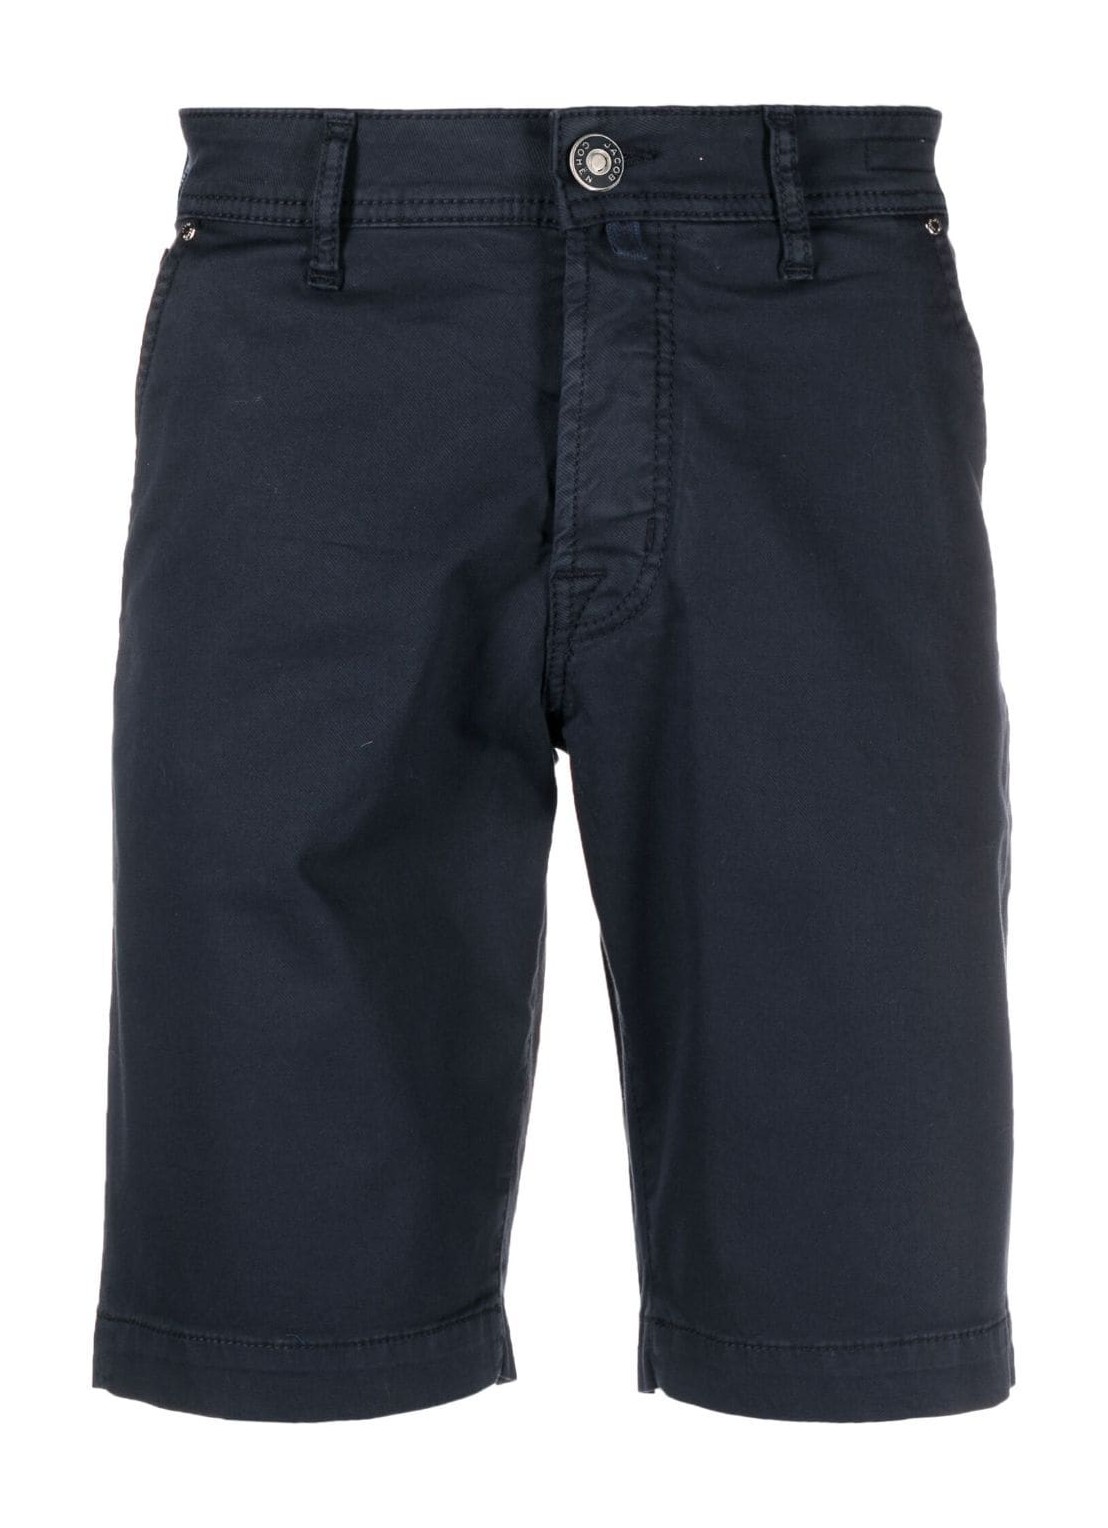 Pantalon corto jacob cohen short pant manbermuda 5t slim  fit lou - uoe0236s3756 y99 talla Azul
 